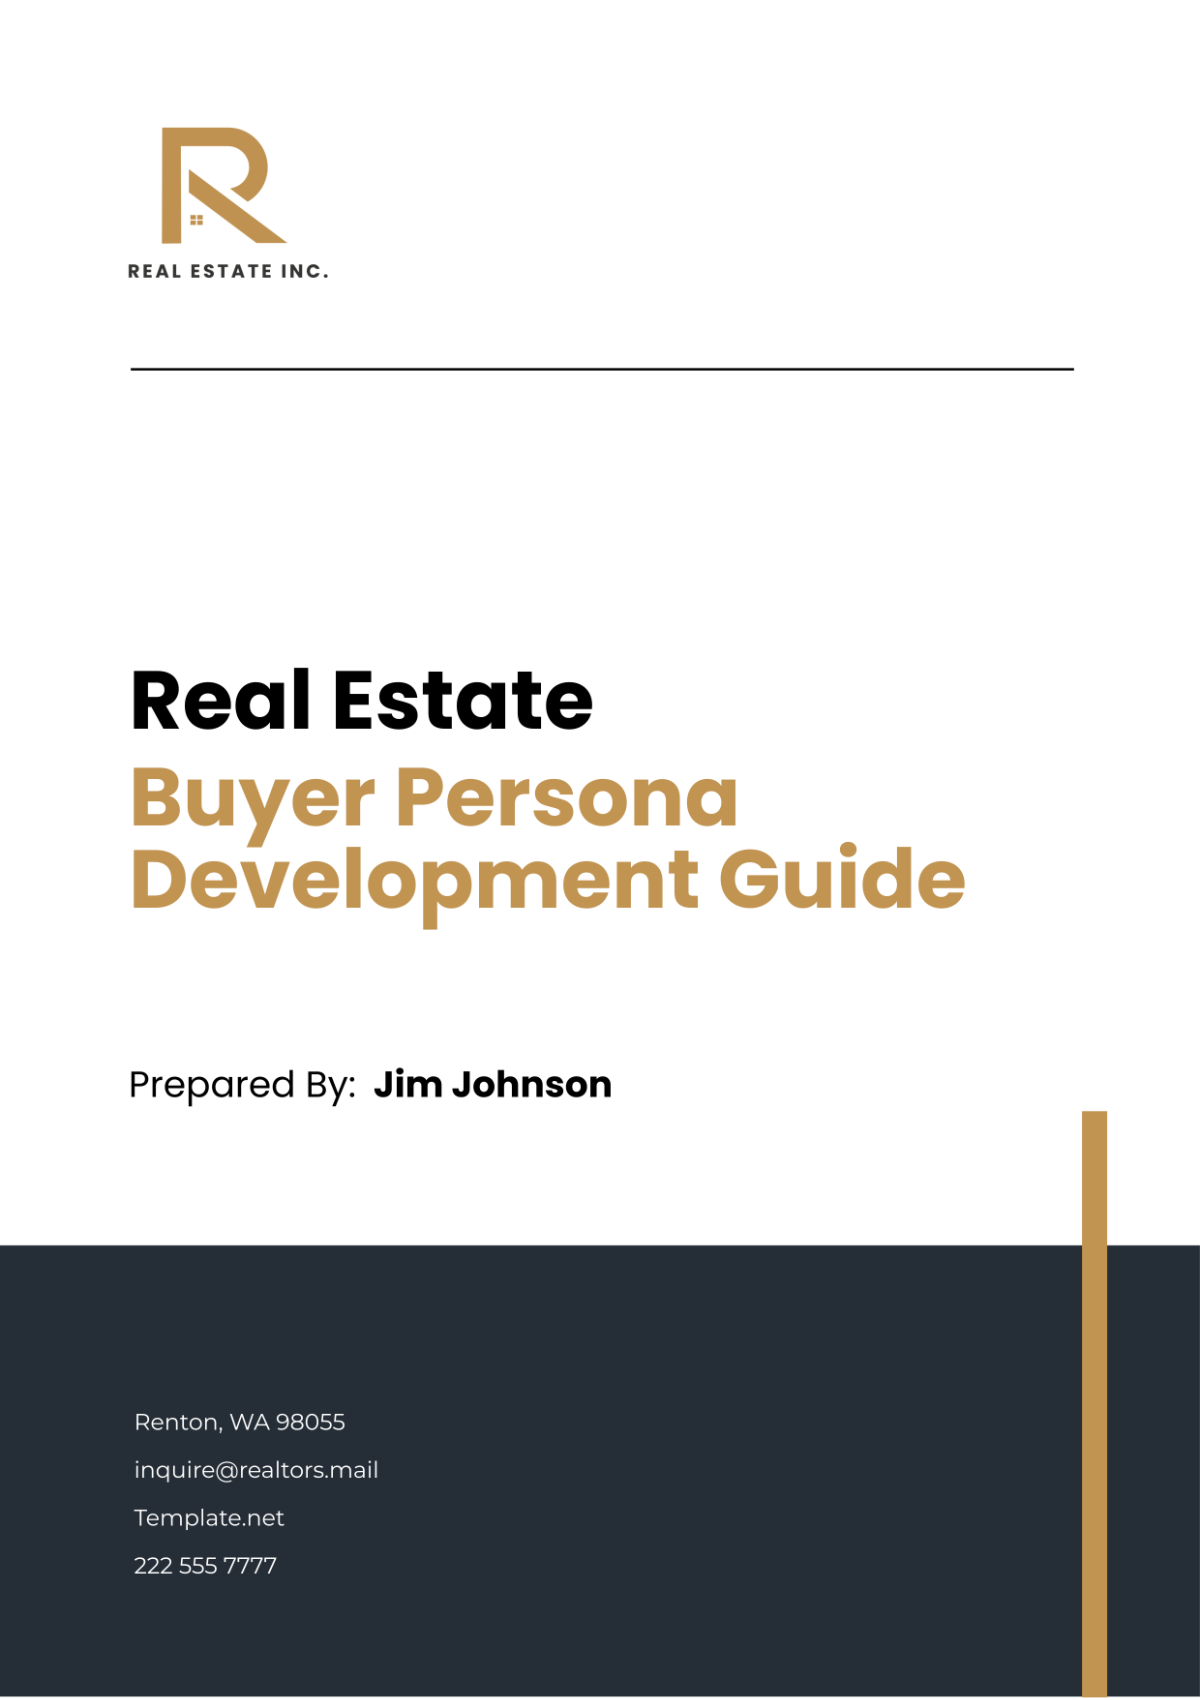 Real Estate Buyer Persona Development Guide Template